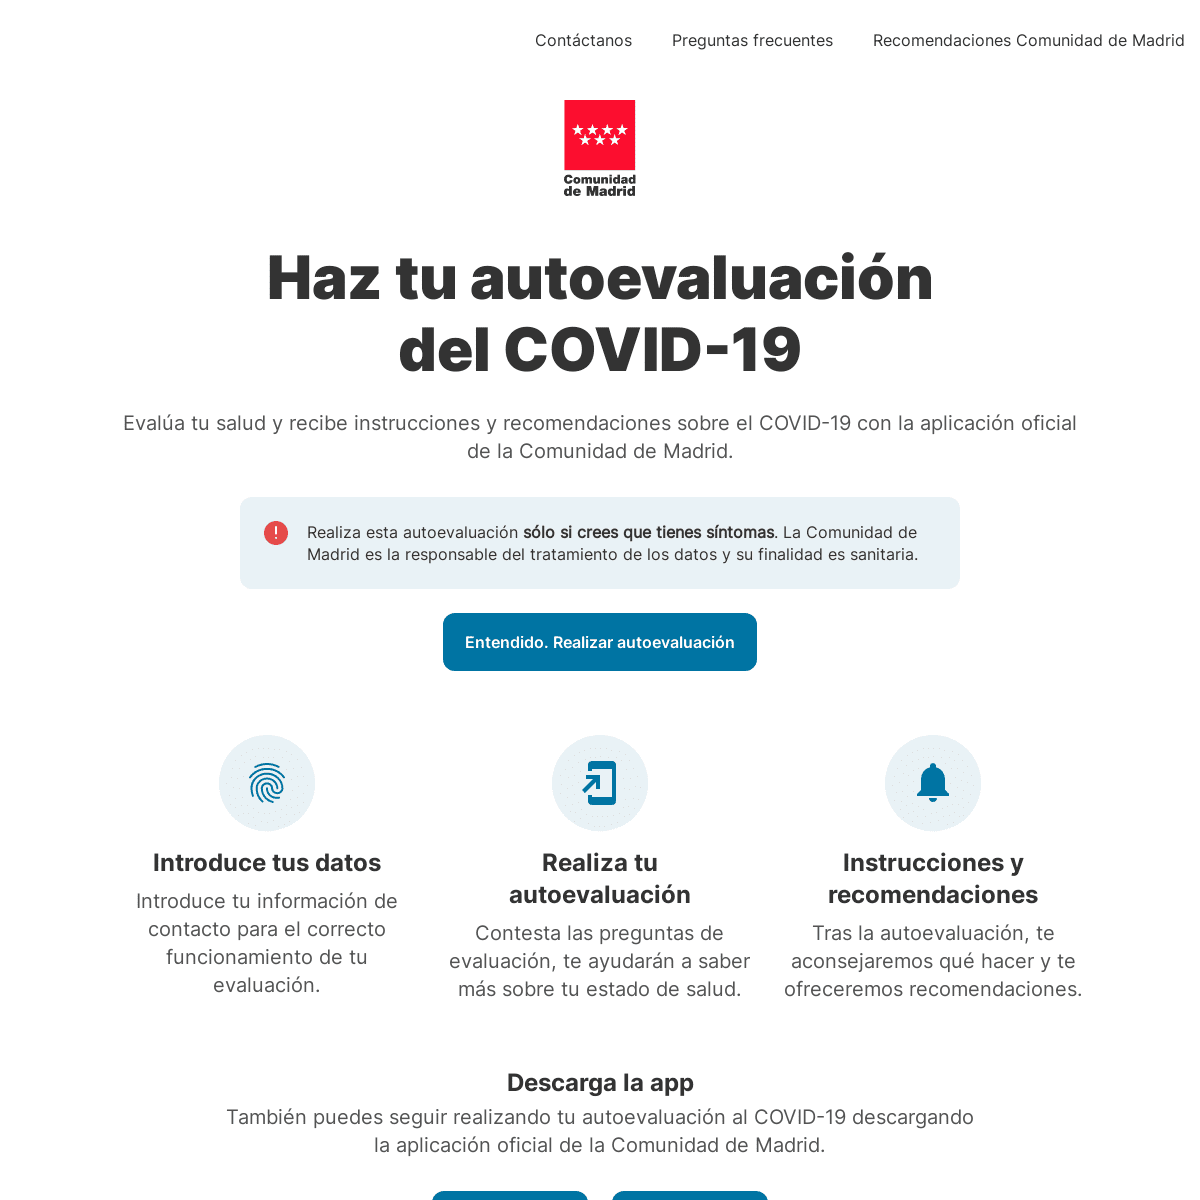 A complete backup of https://coronamadrid.com